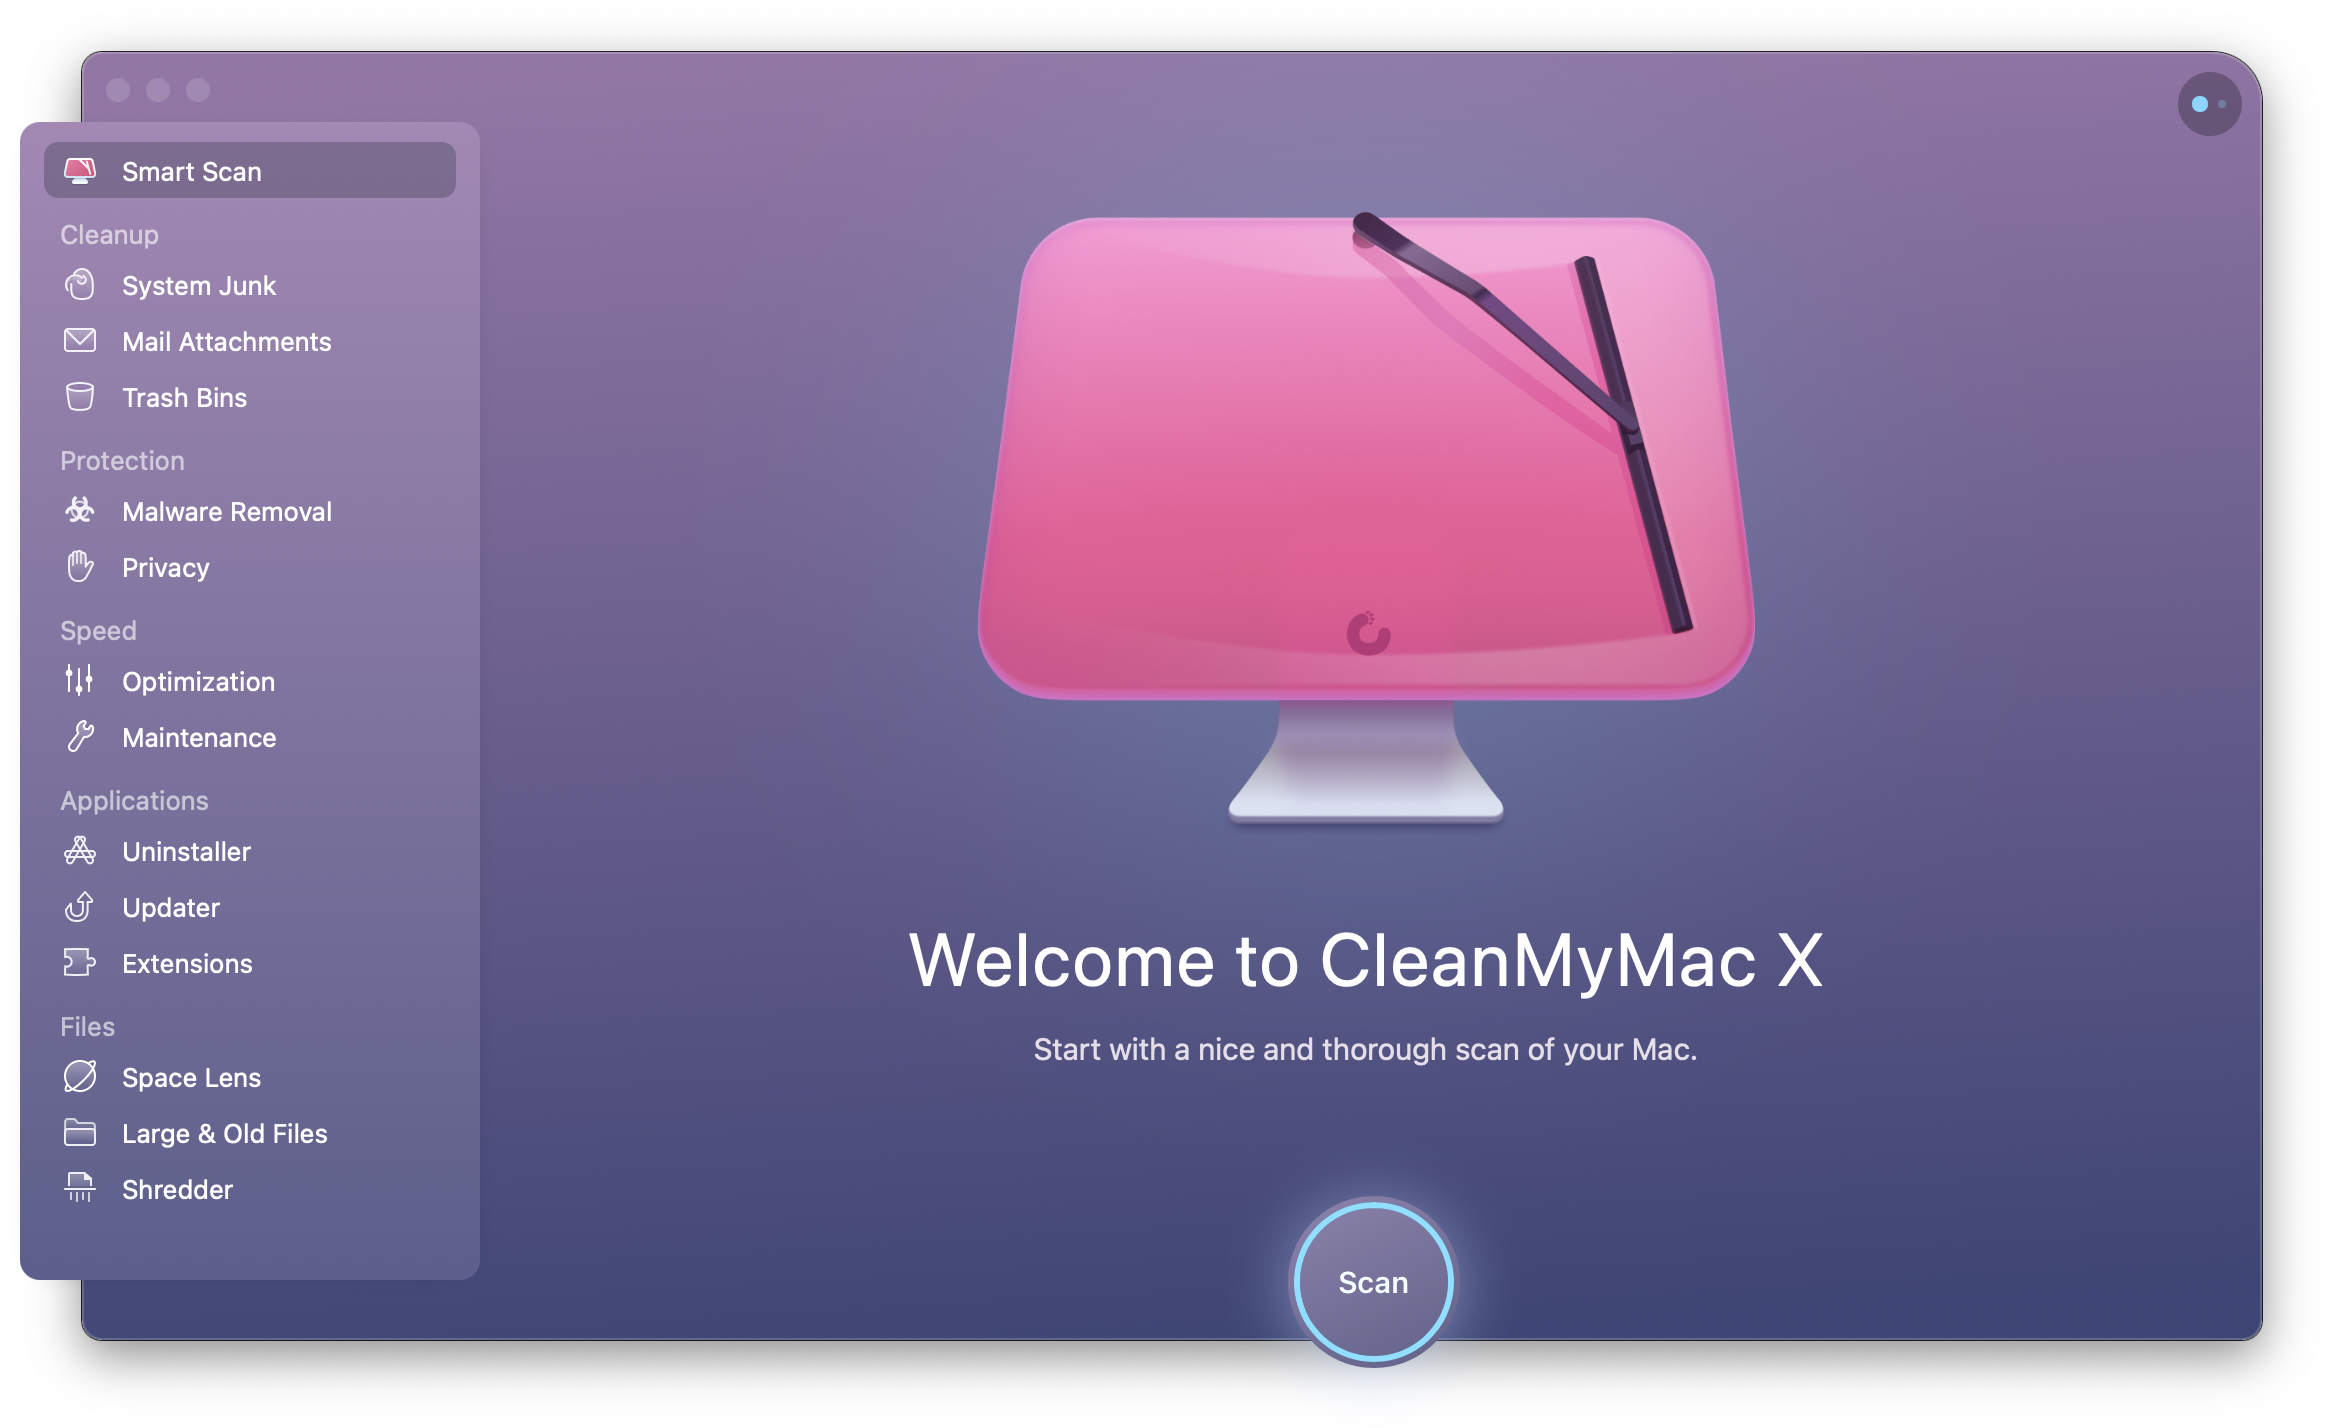 clean my mc 3.8 torrent mac